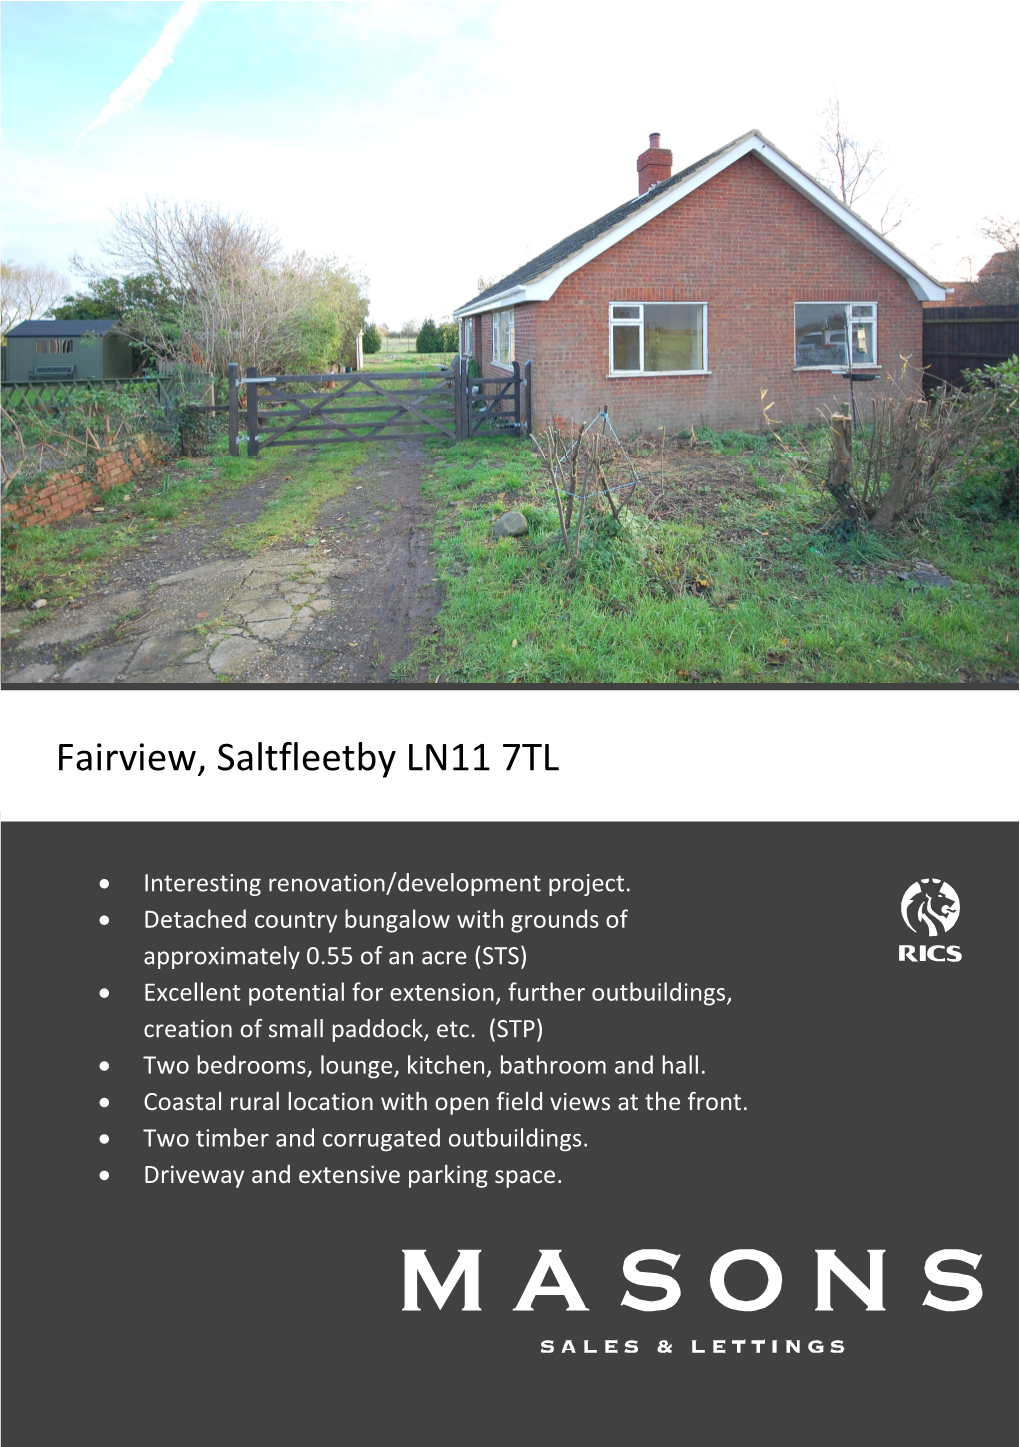 Fairview, Saltfleetby LN11 7TL